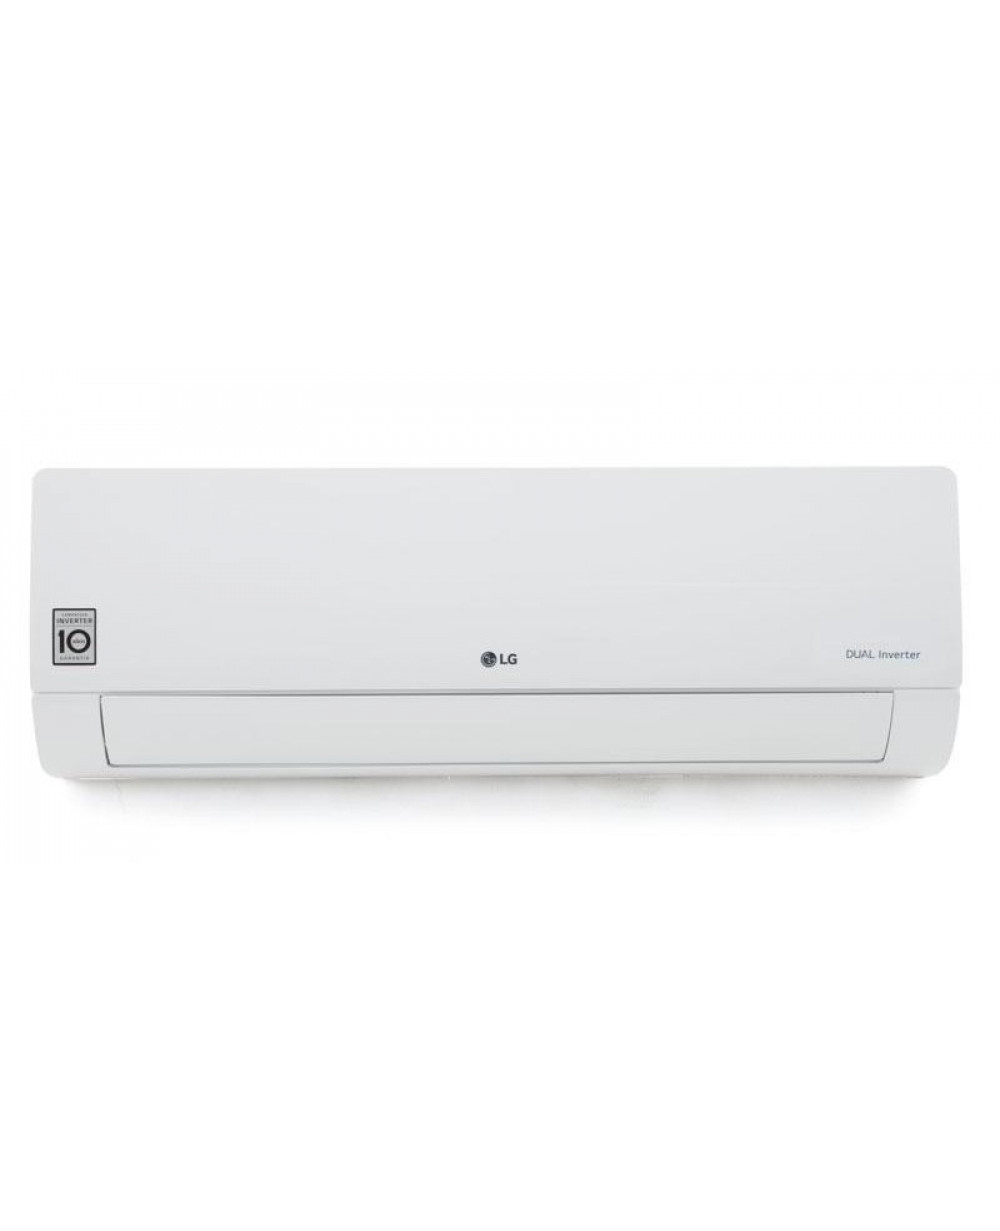 LG 1.5 Ton Air Conditioner VM182H6